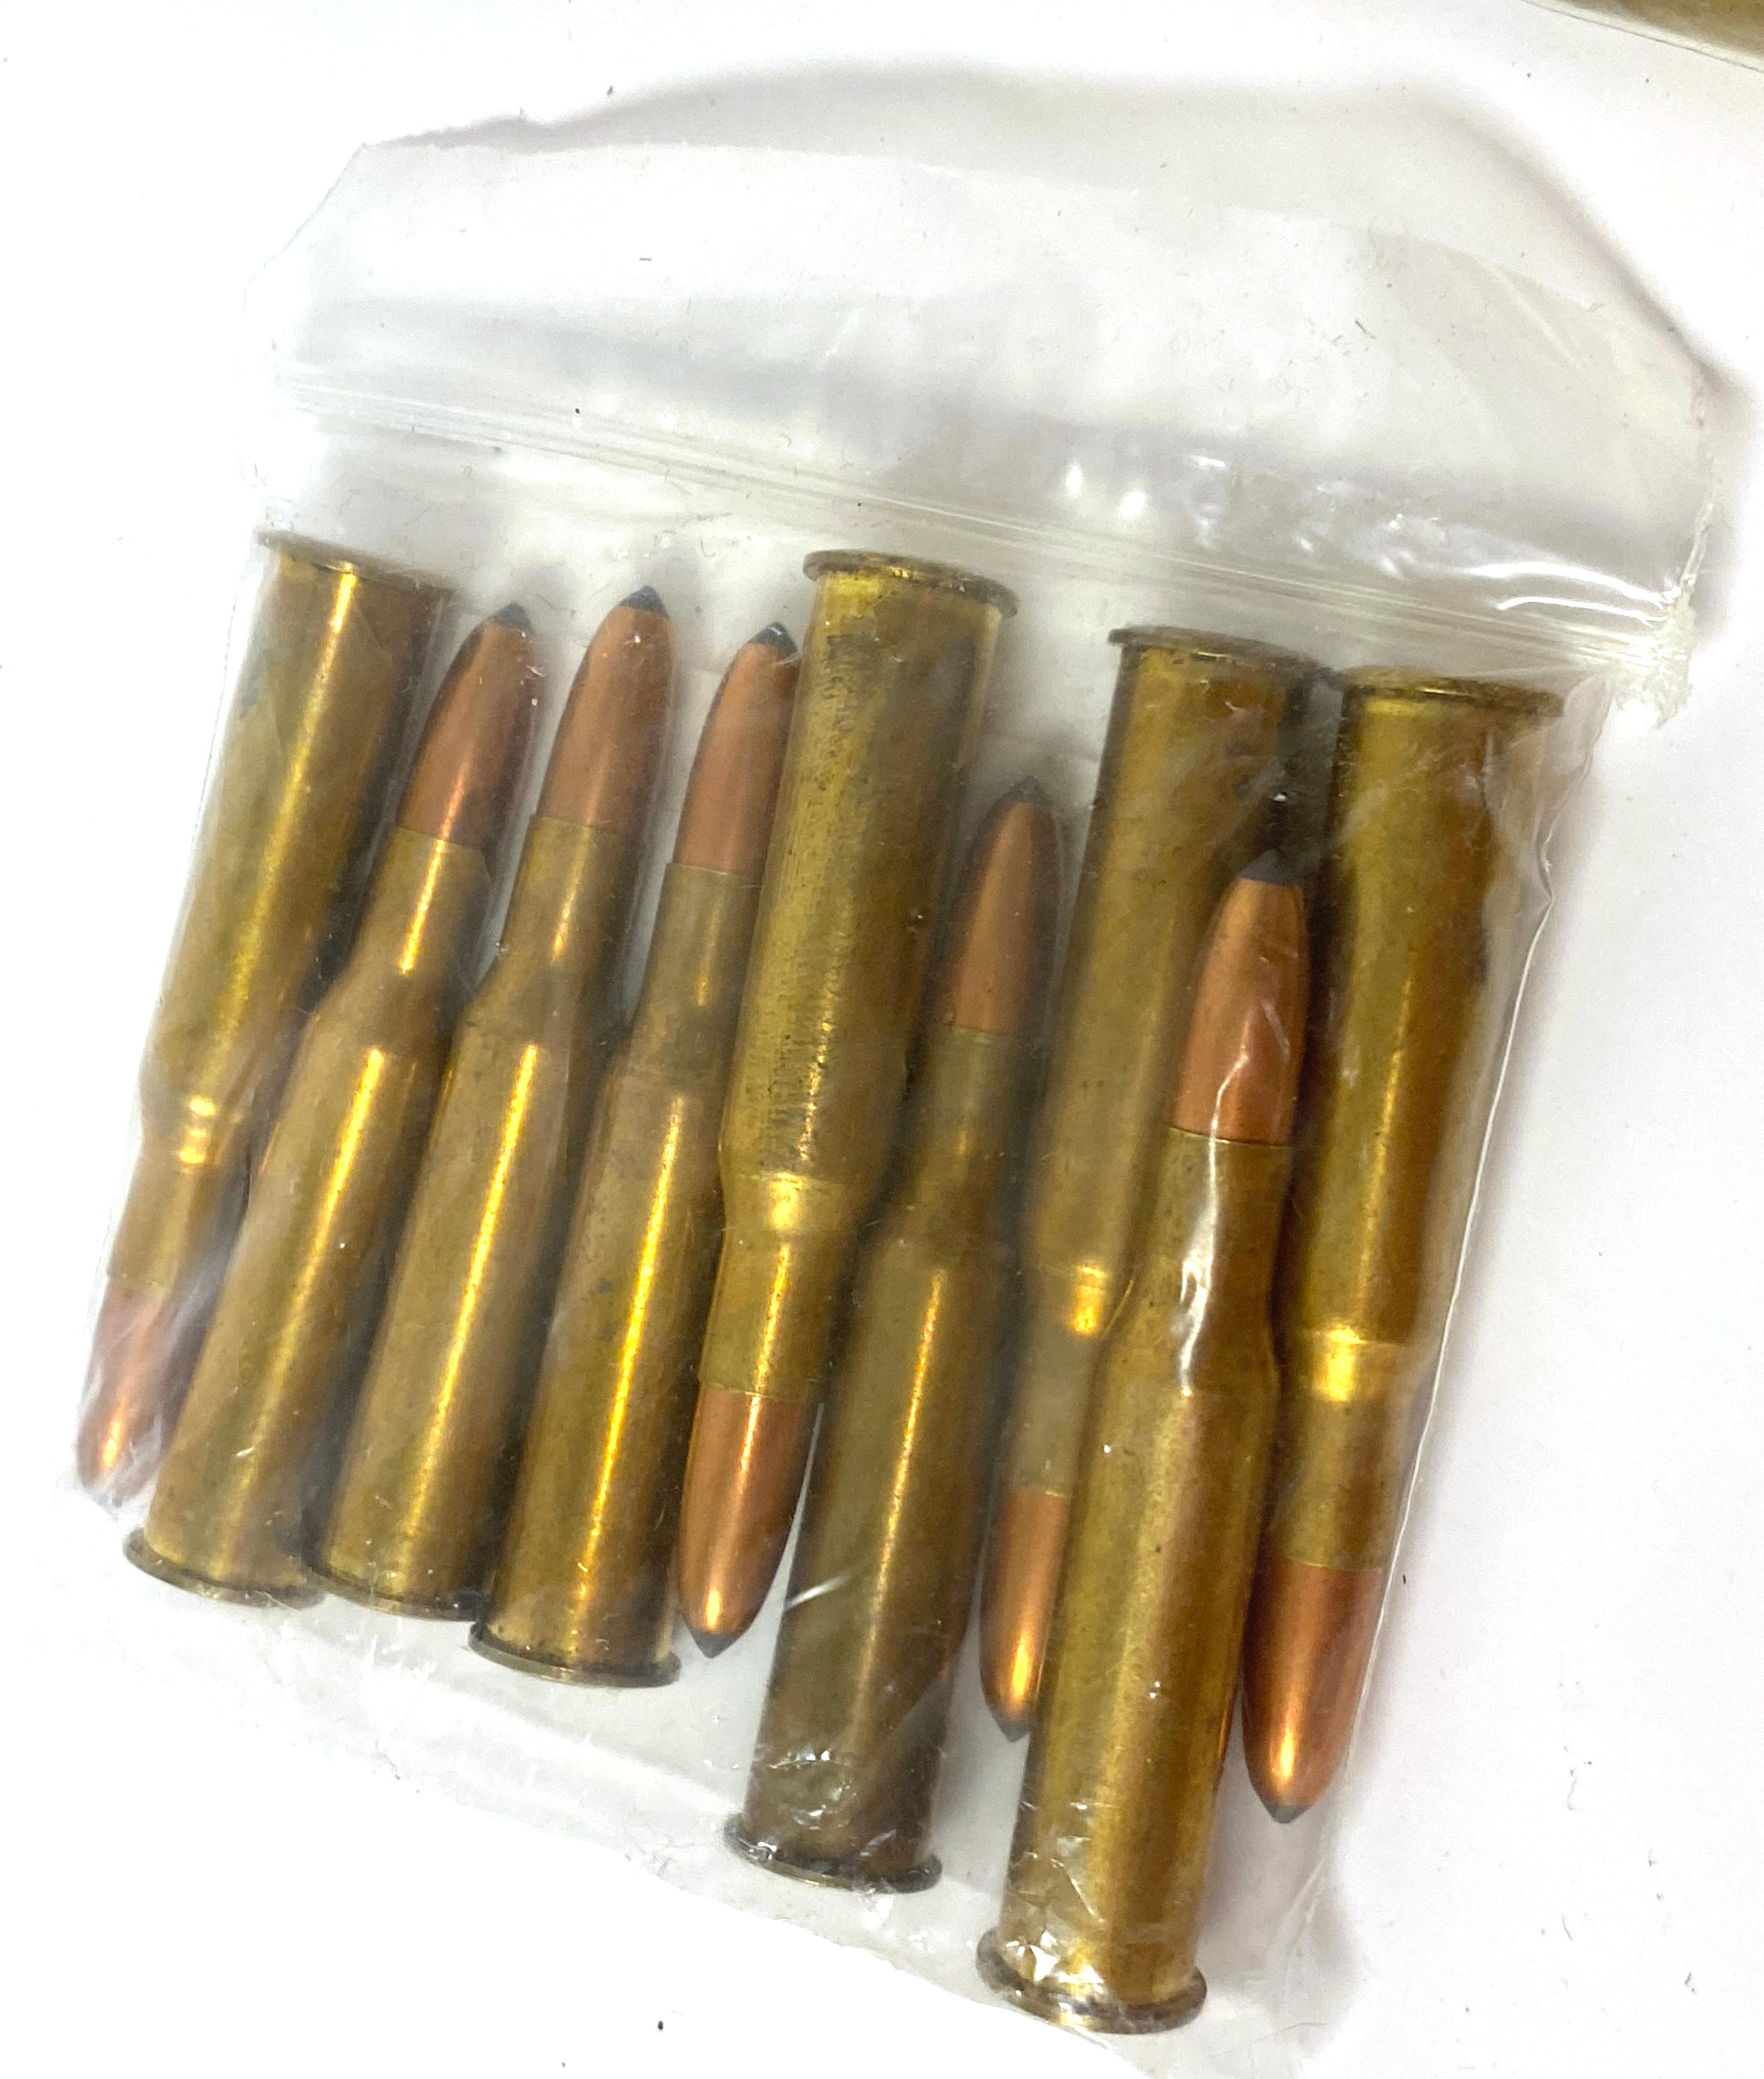 New 18rds. of 7.62x54r 150gr. BUL Ammunition